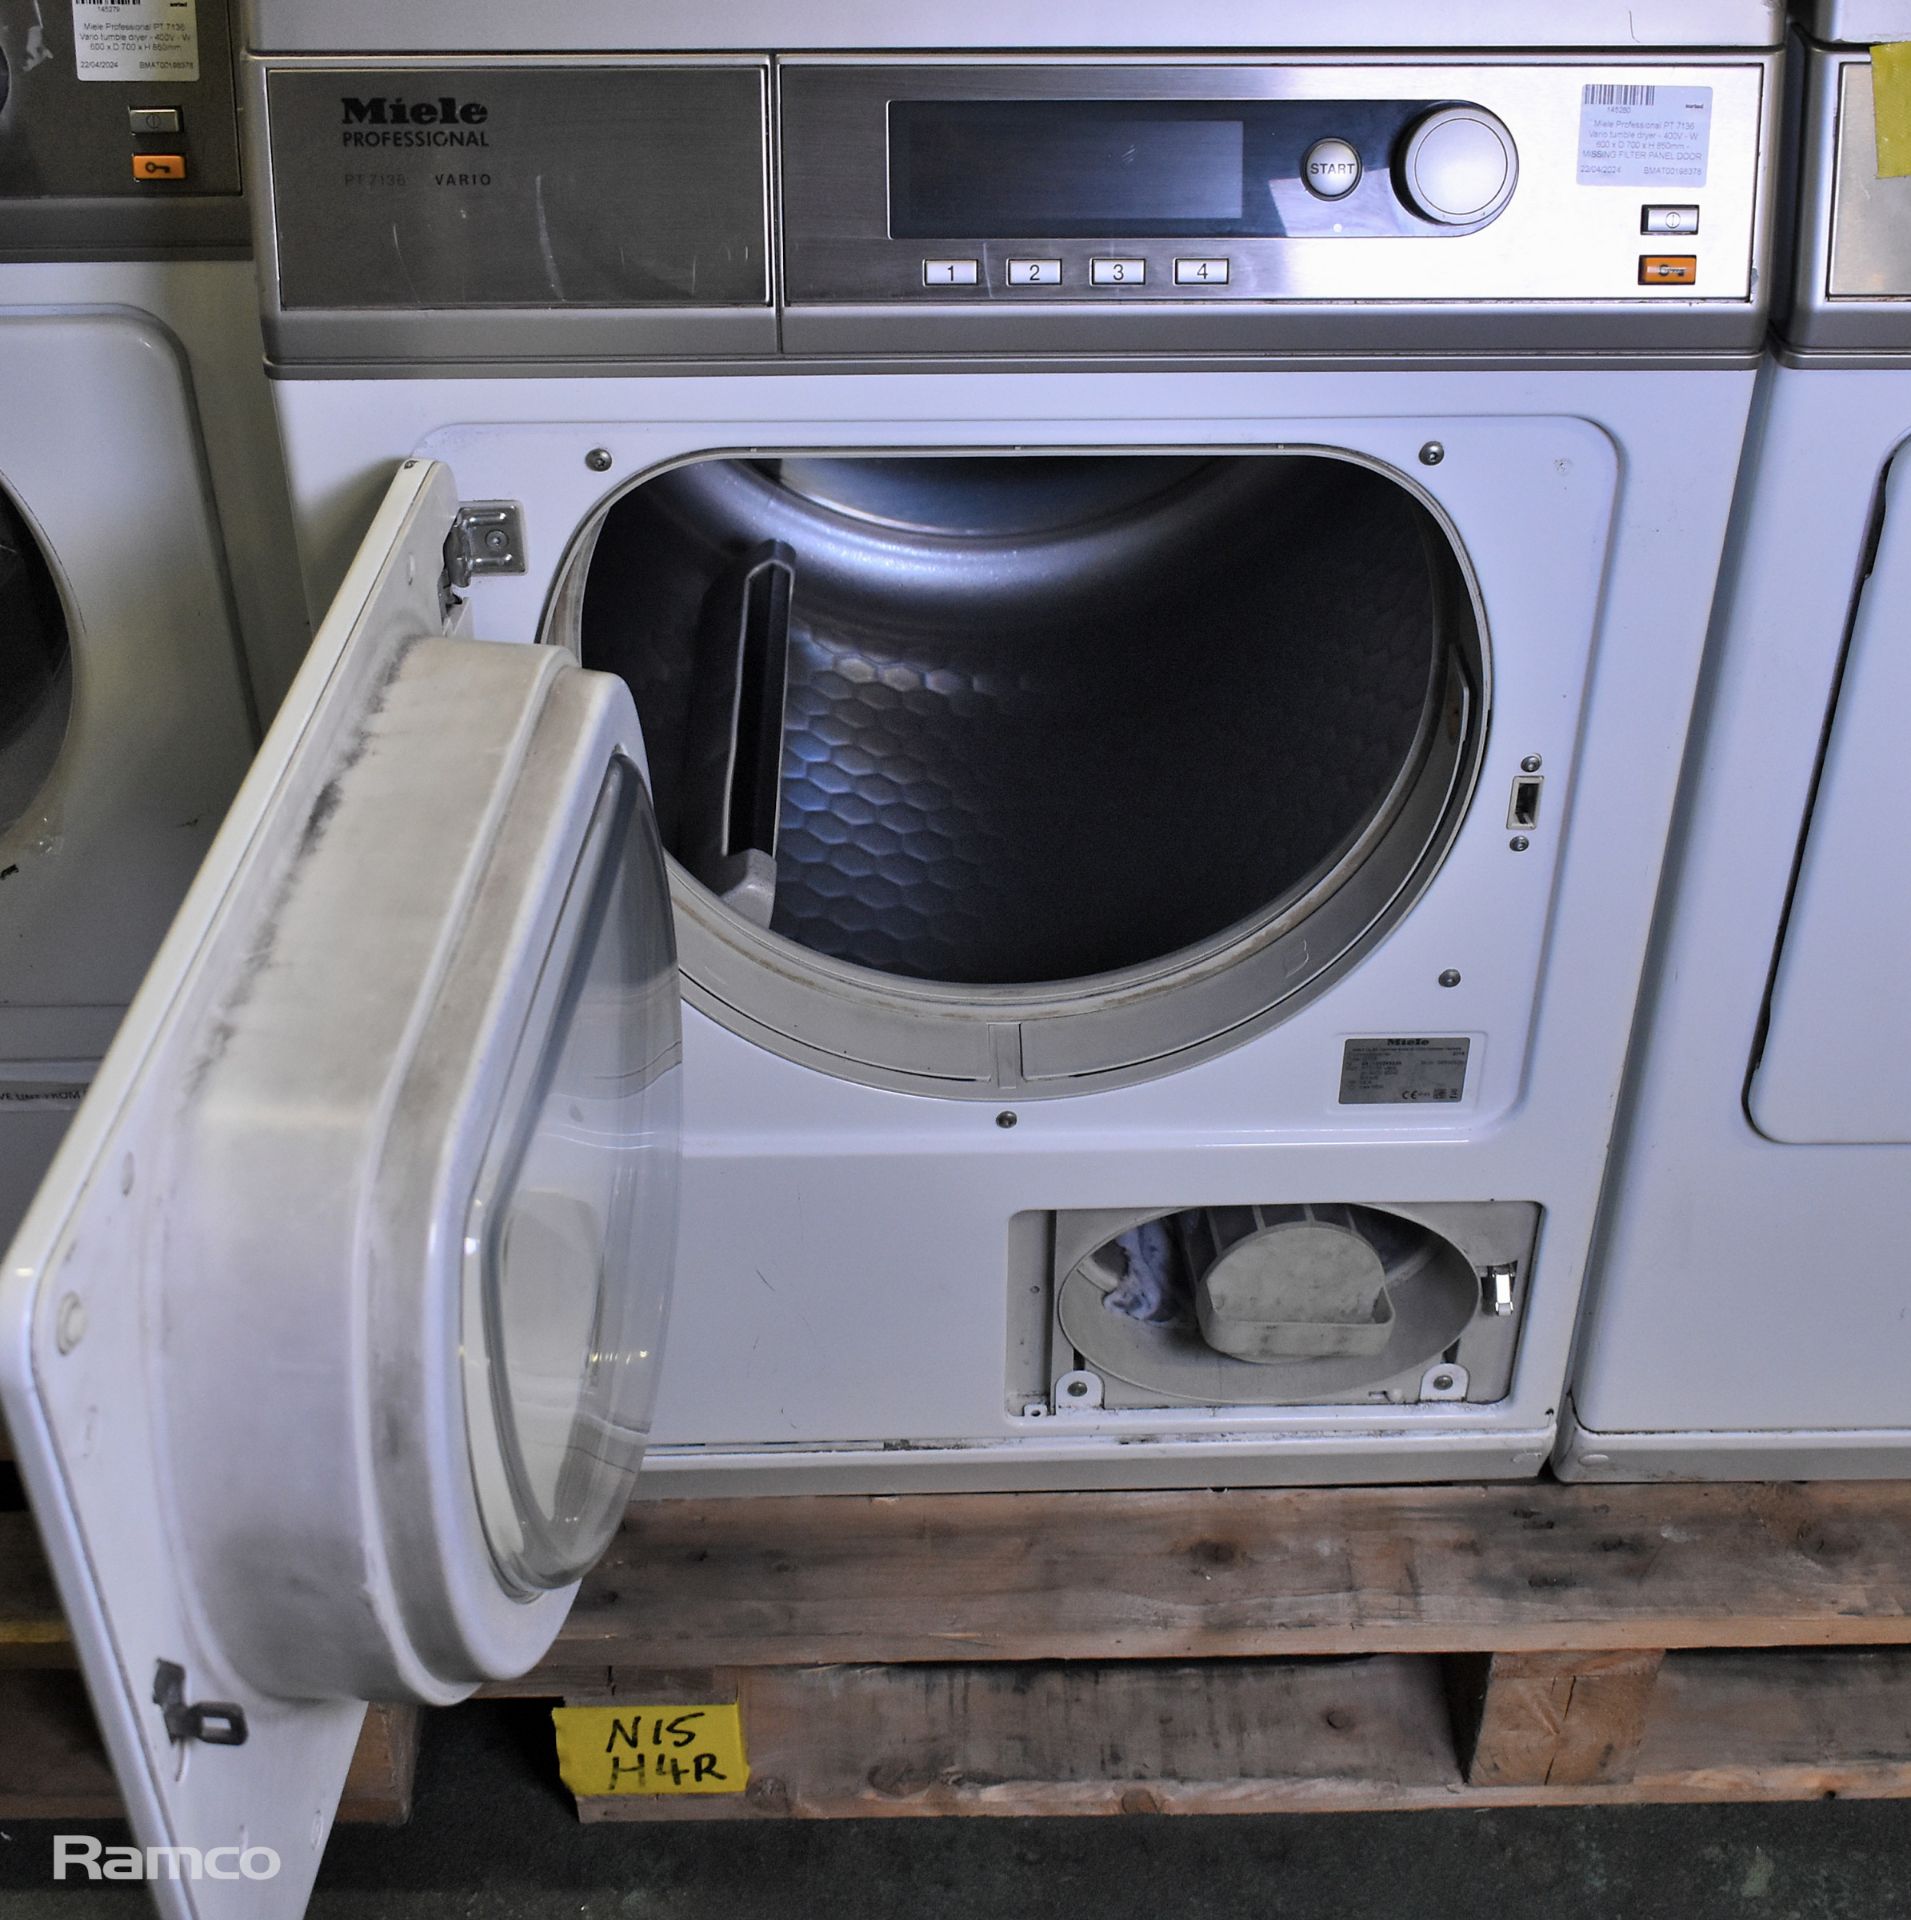 Miele Professional PT 7136 Vario tumble dryer - 400V - W 600 x D 700 x H 850mm - Image 2 of 5